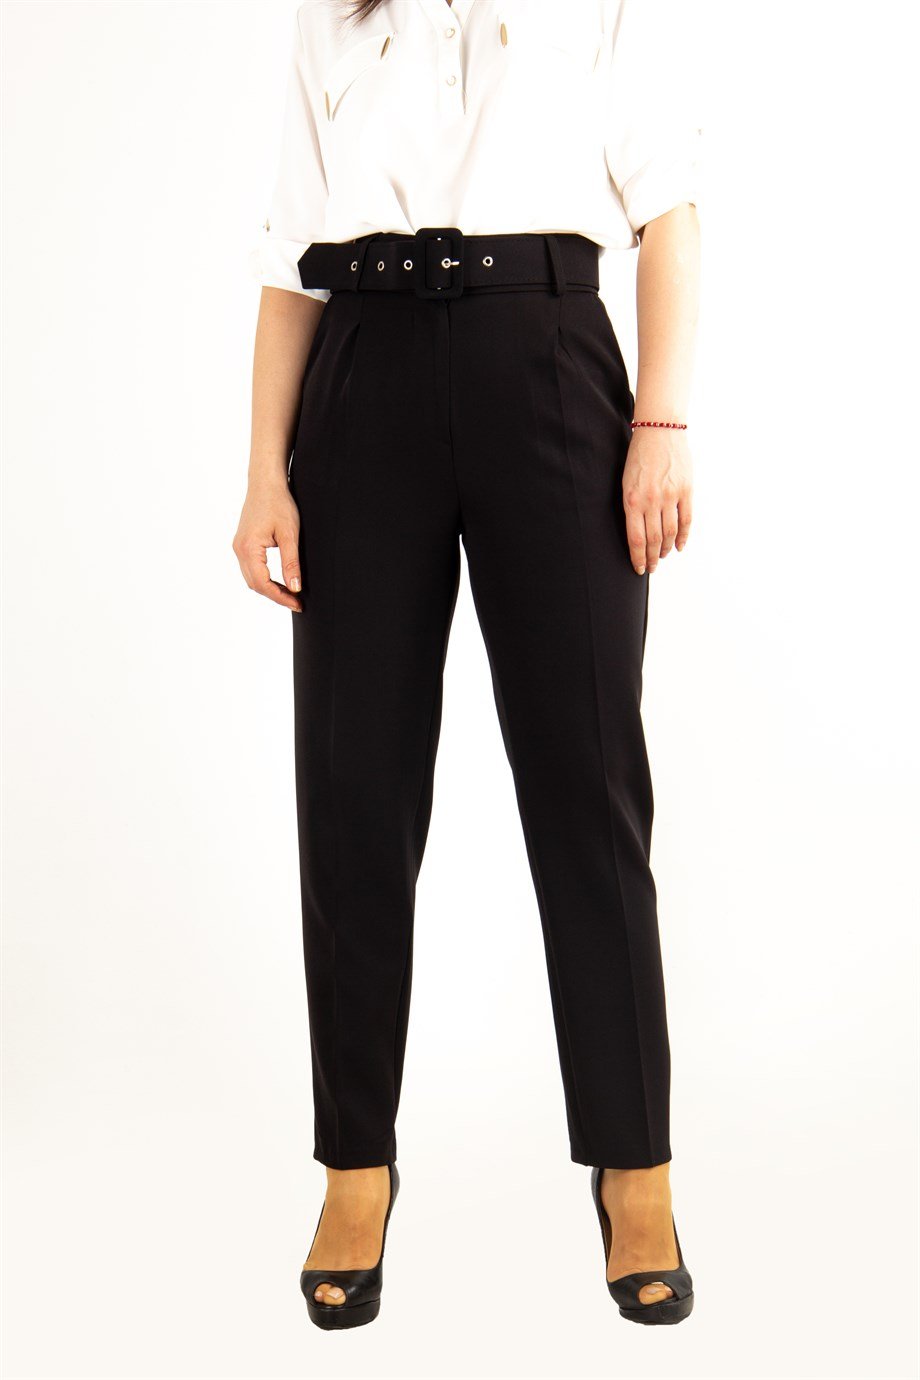 Office Ladies Career Pants Elegant Long Black Cotton Casual